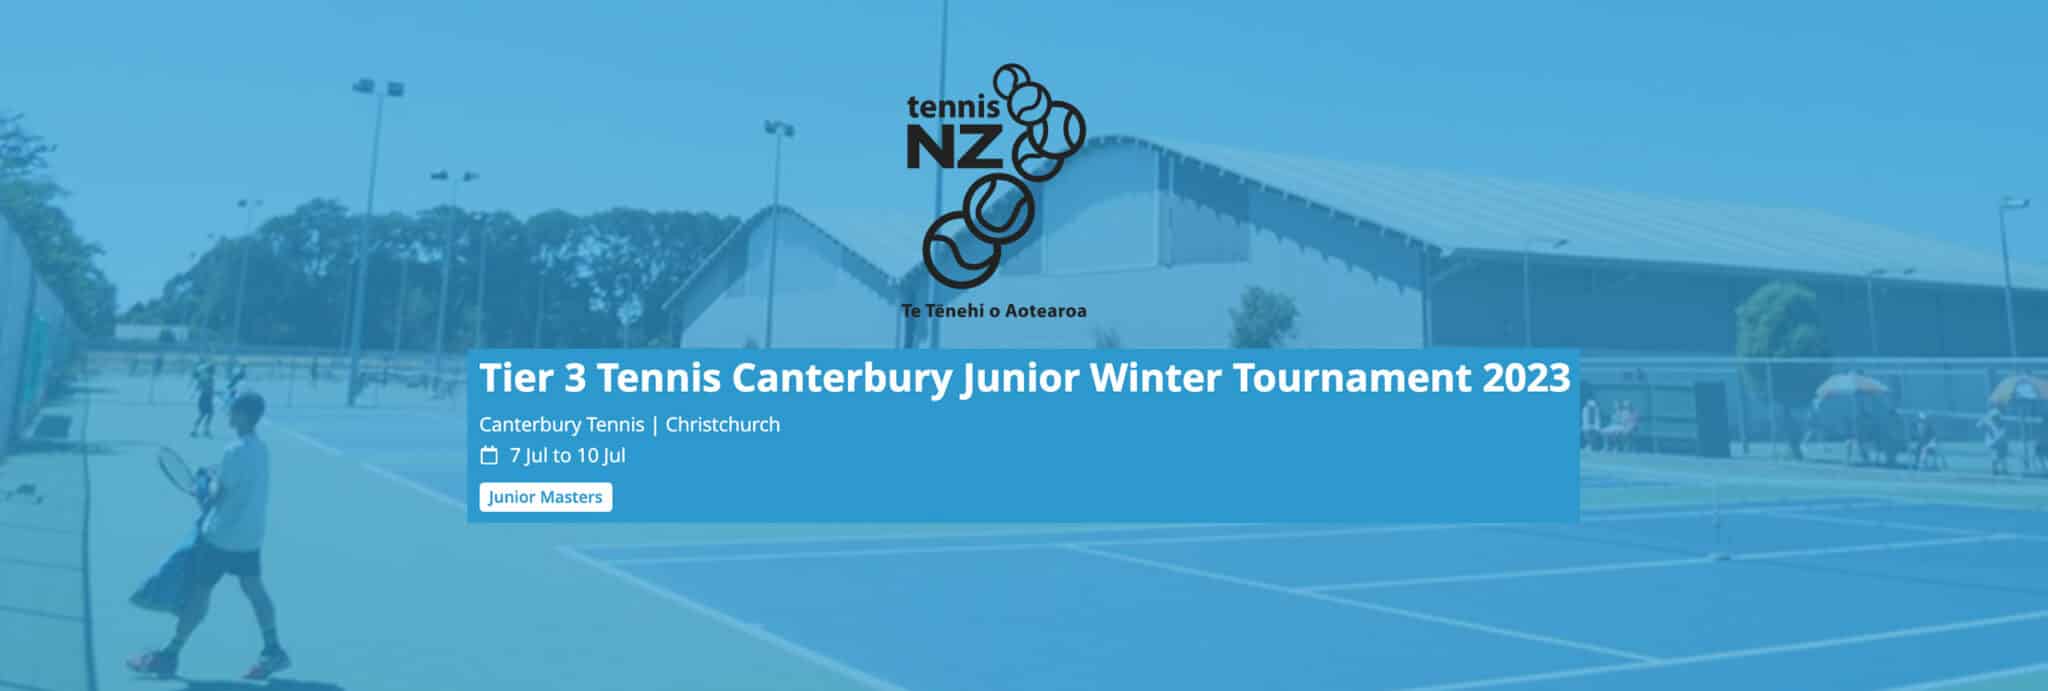 Tier 3 Tennis Canterbury Junior Winter Tournament 2023